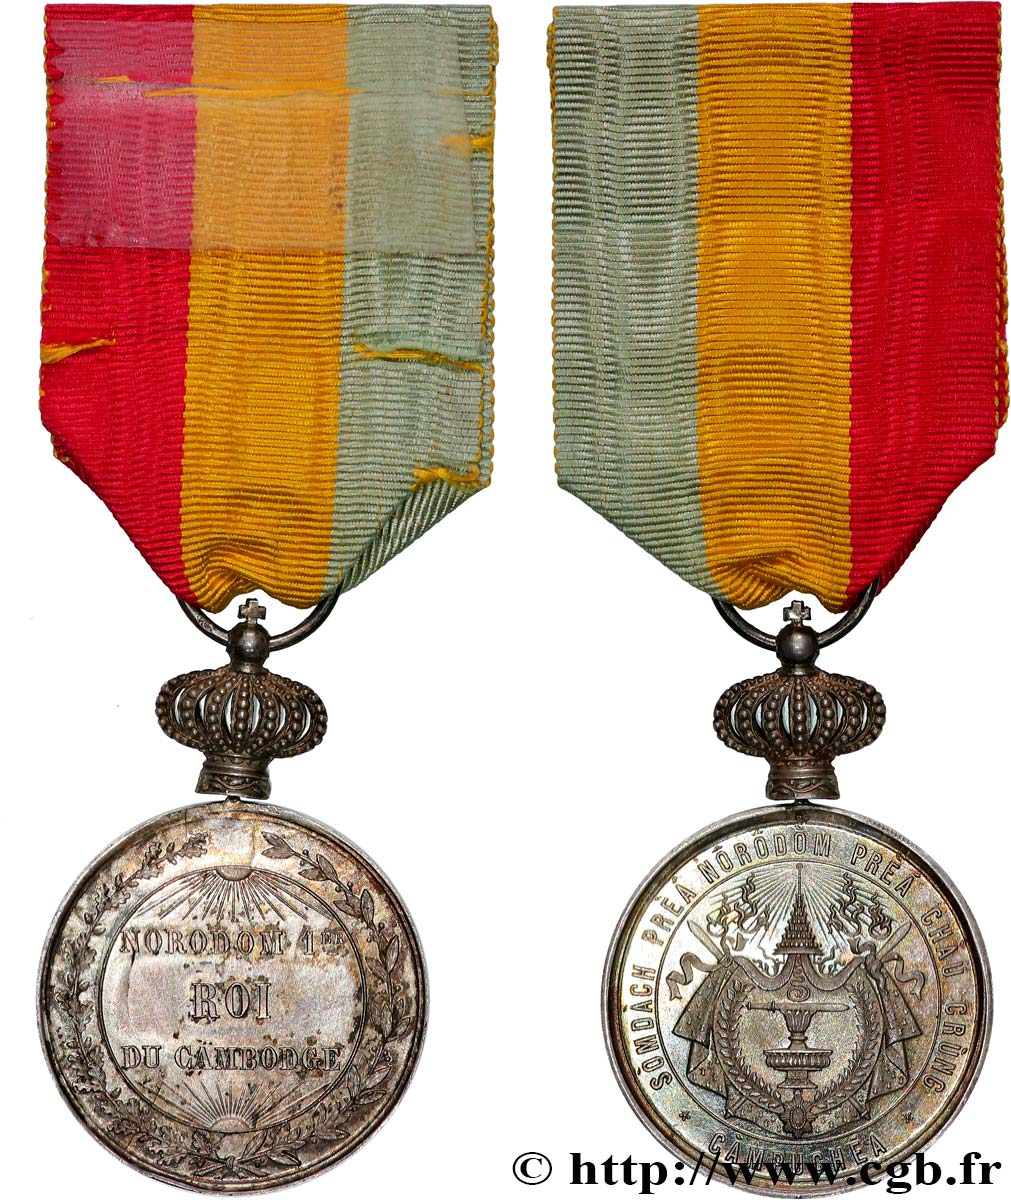 CAMBODIA - KINGDOM OF CAMBODIA - NORODOM I Médaille, Couronnement du roi Norodom Ier AU